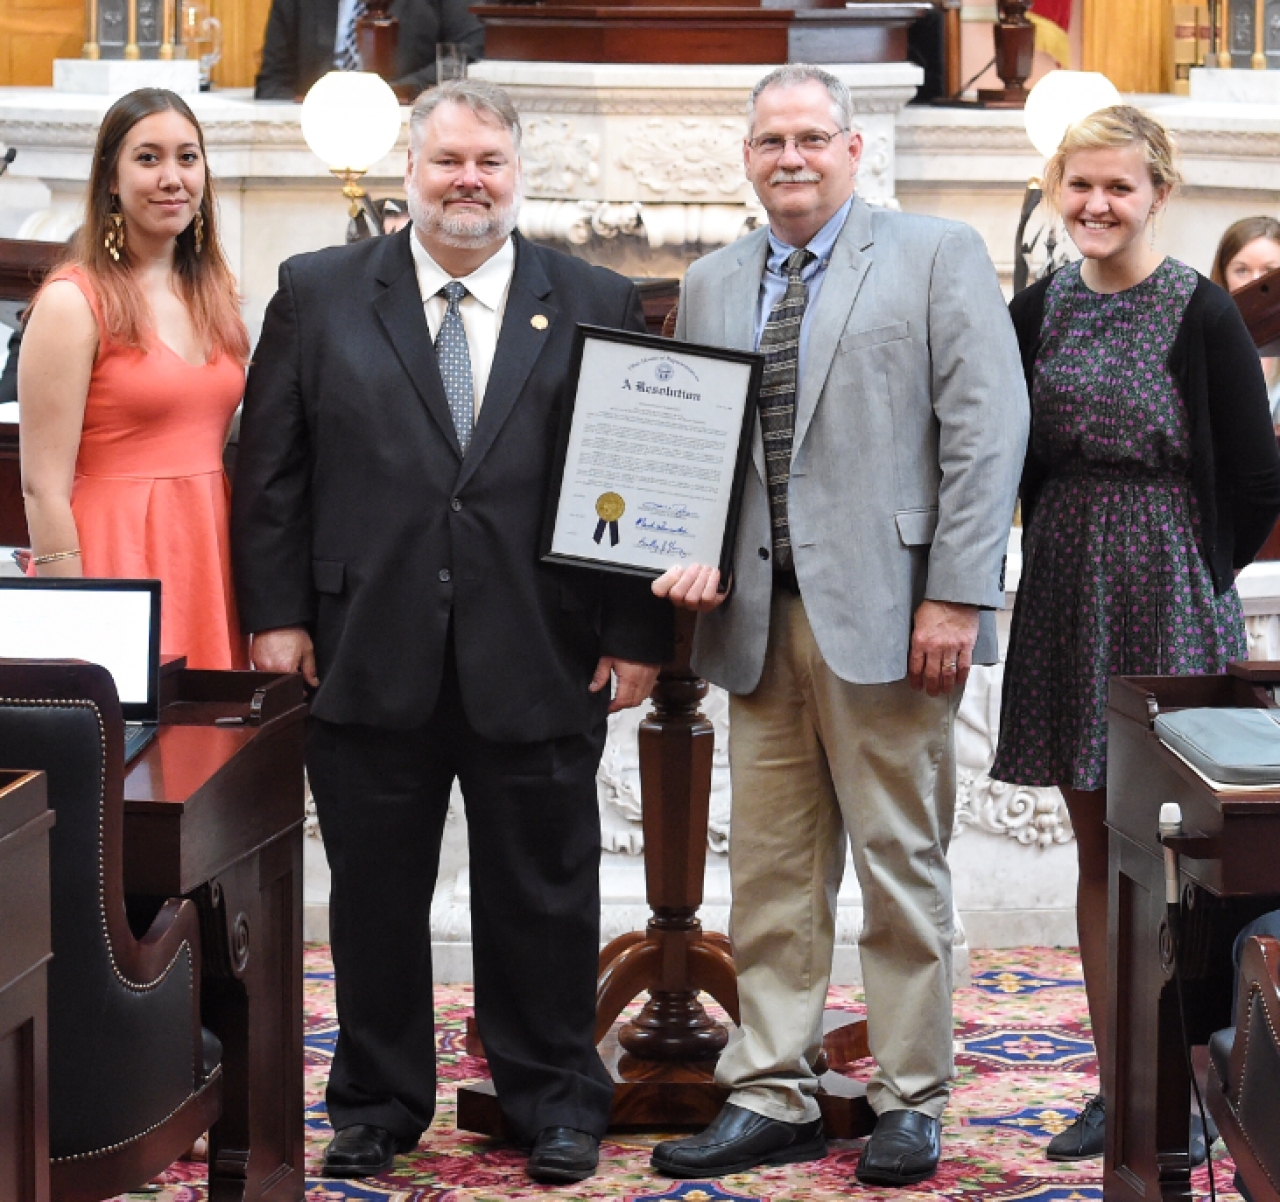 State Representative Romanchuk Honors Little Buckeye Children's Museum During Ohio House Session